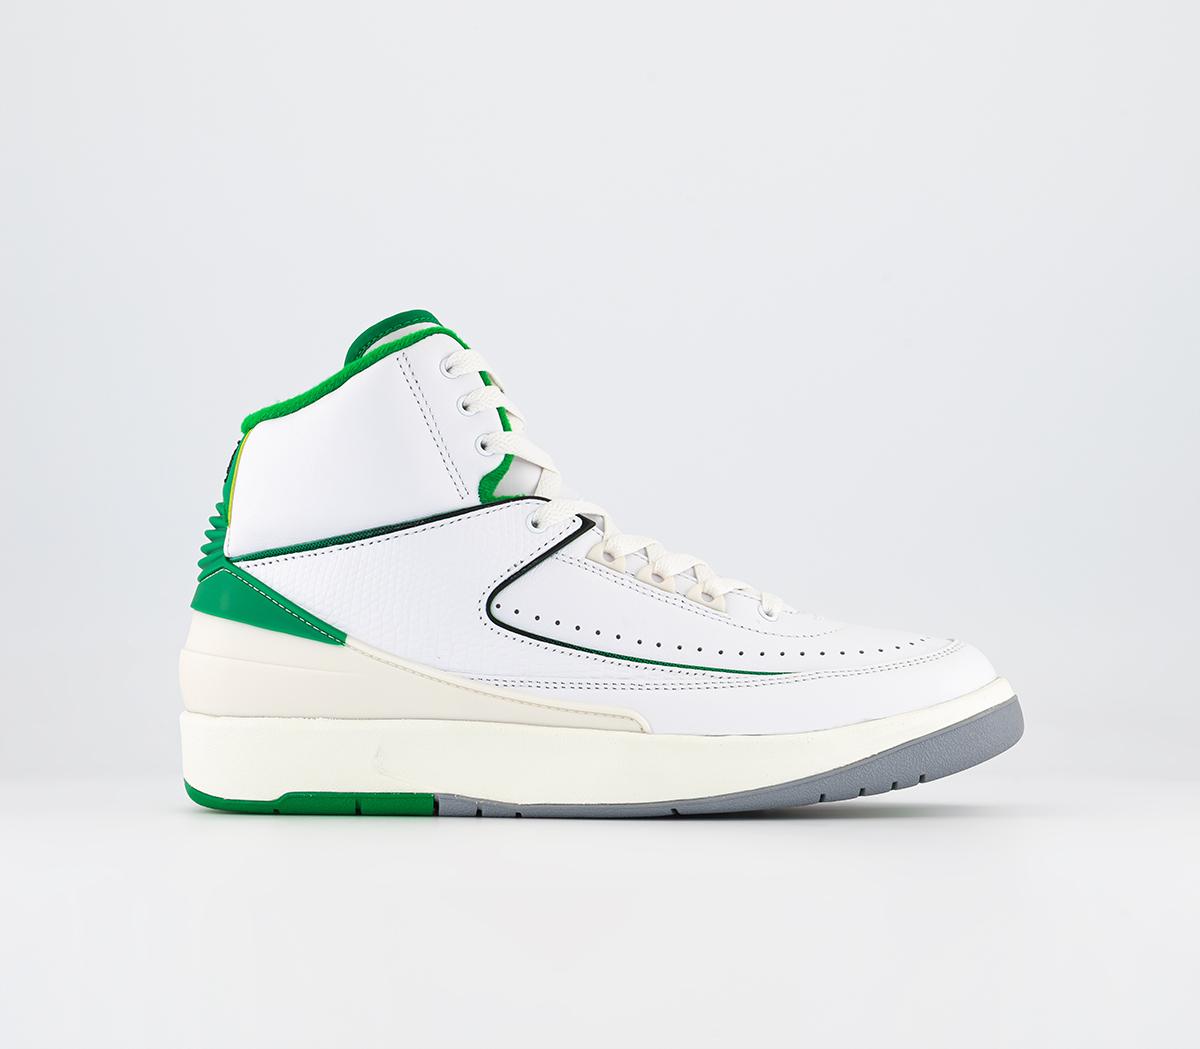 Nike Air Jordan 2 Trainers White Lucky Green Light Grey